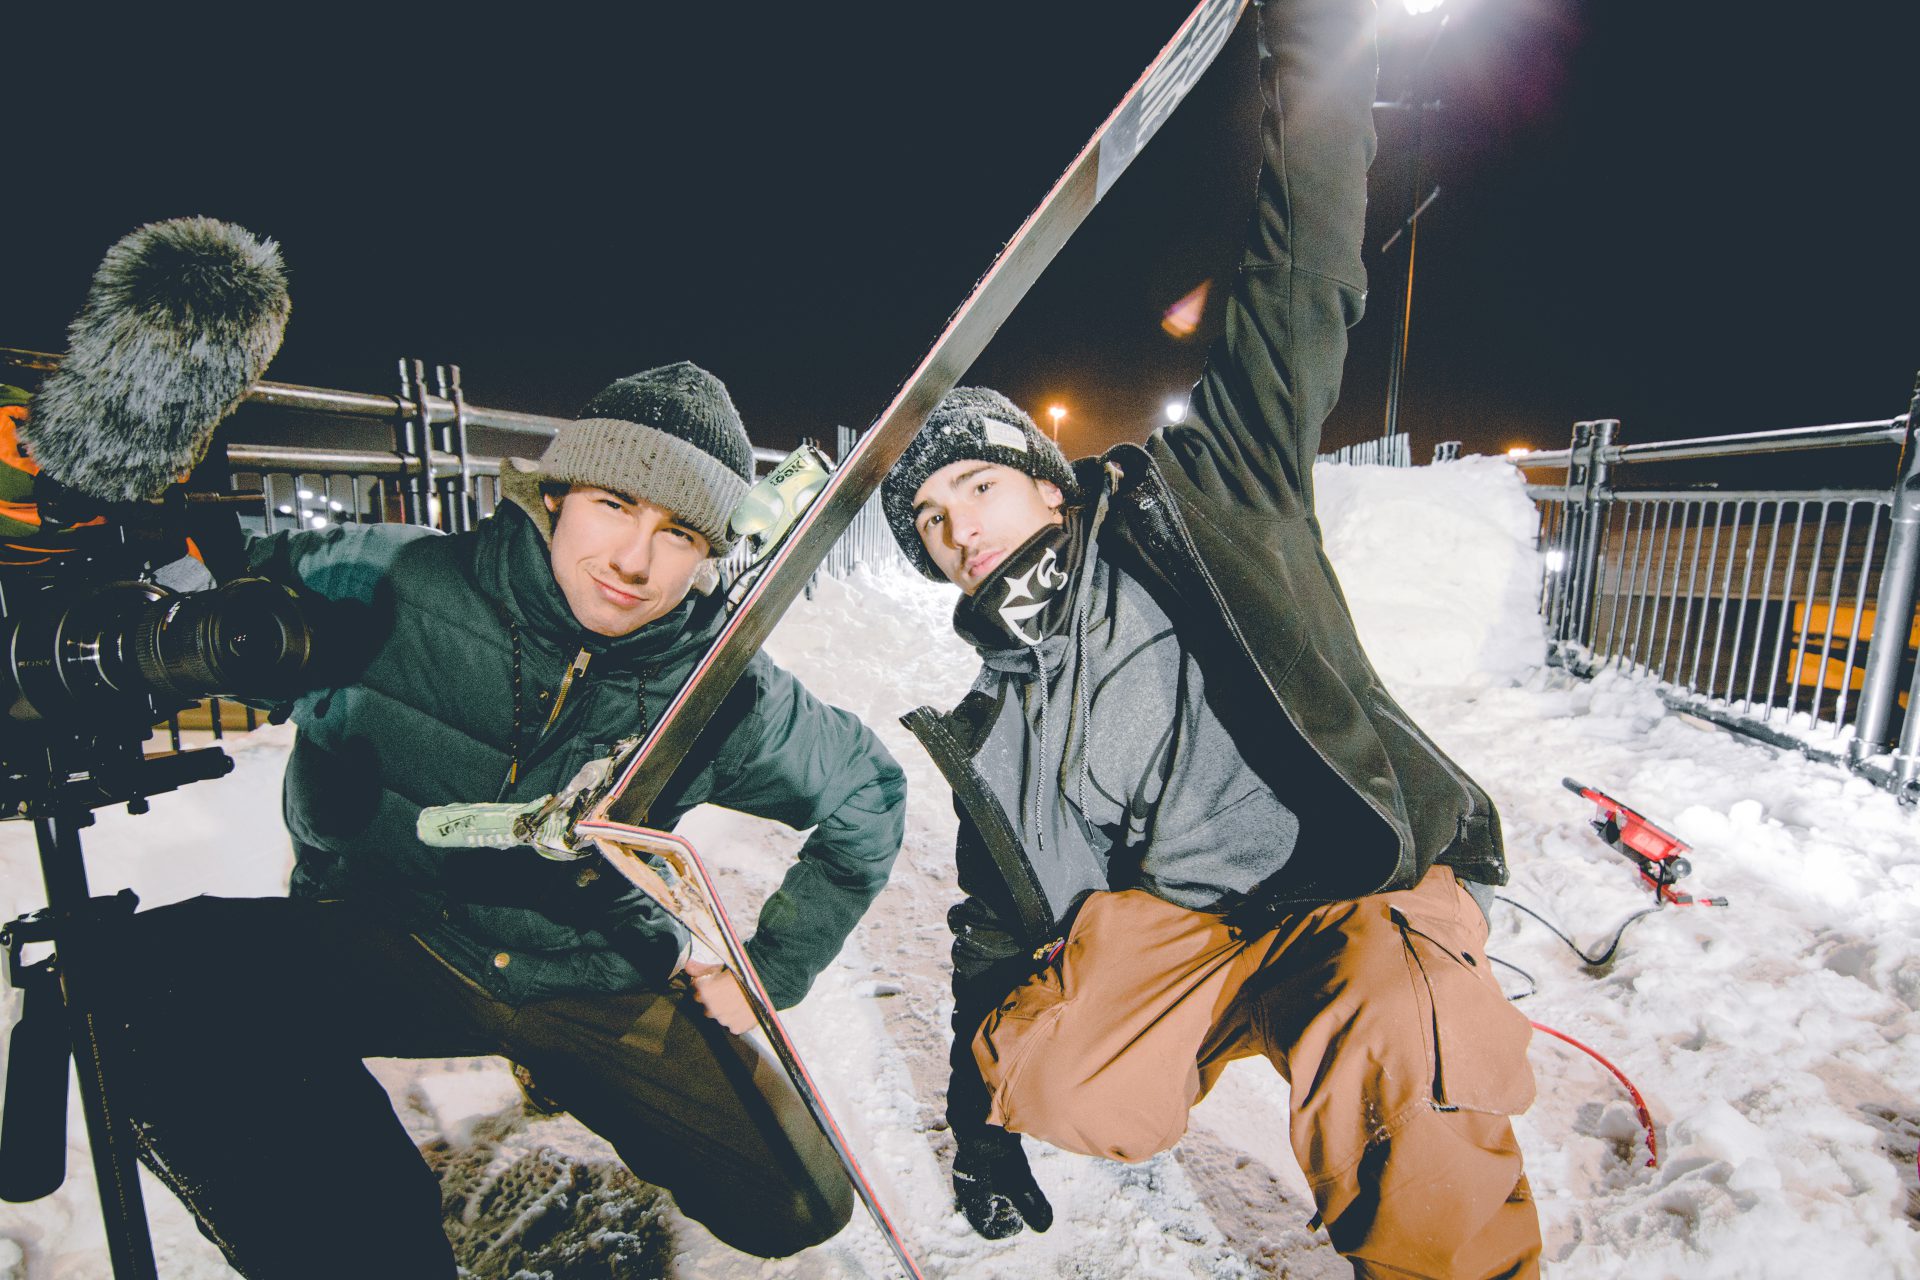 Freeze Episode 1 by Julien Eustache and David Bonneville. Just another broken ski.